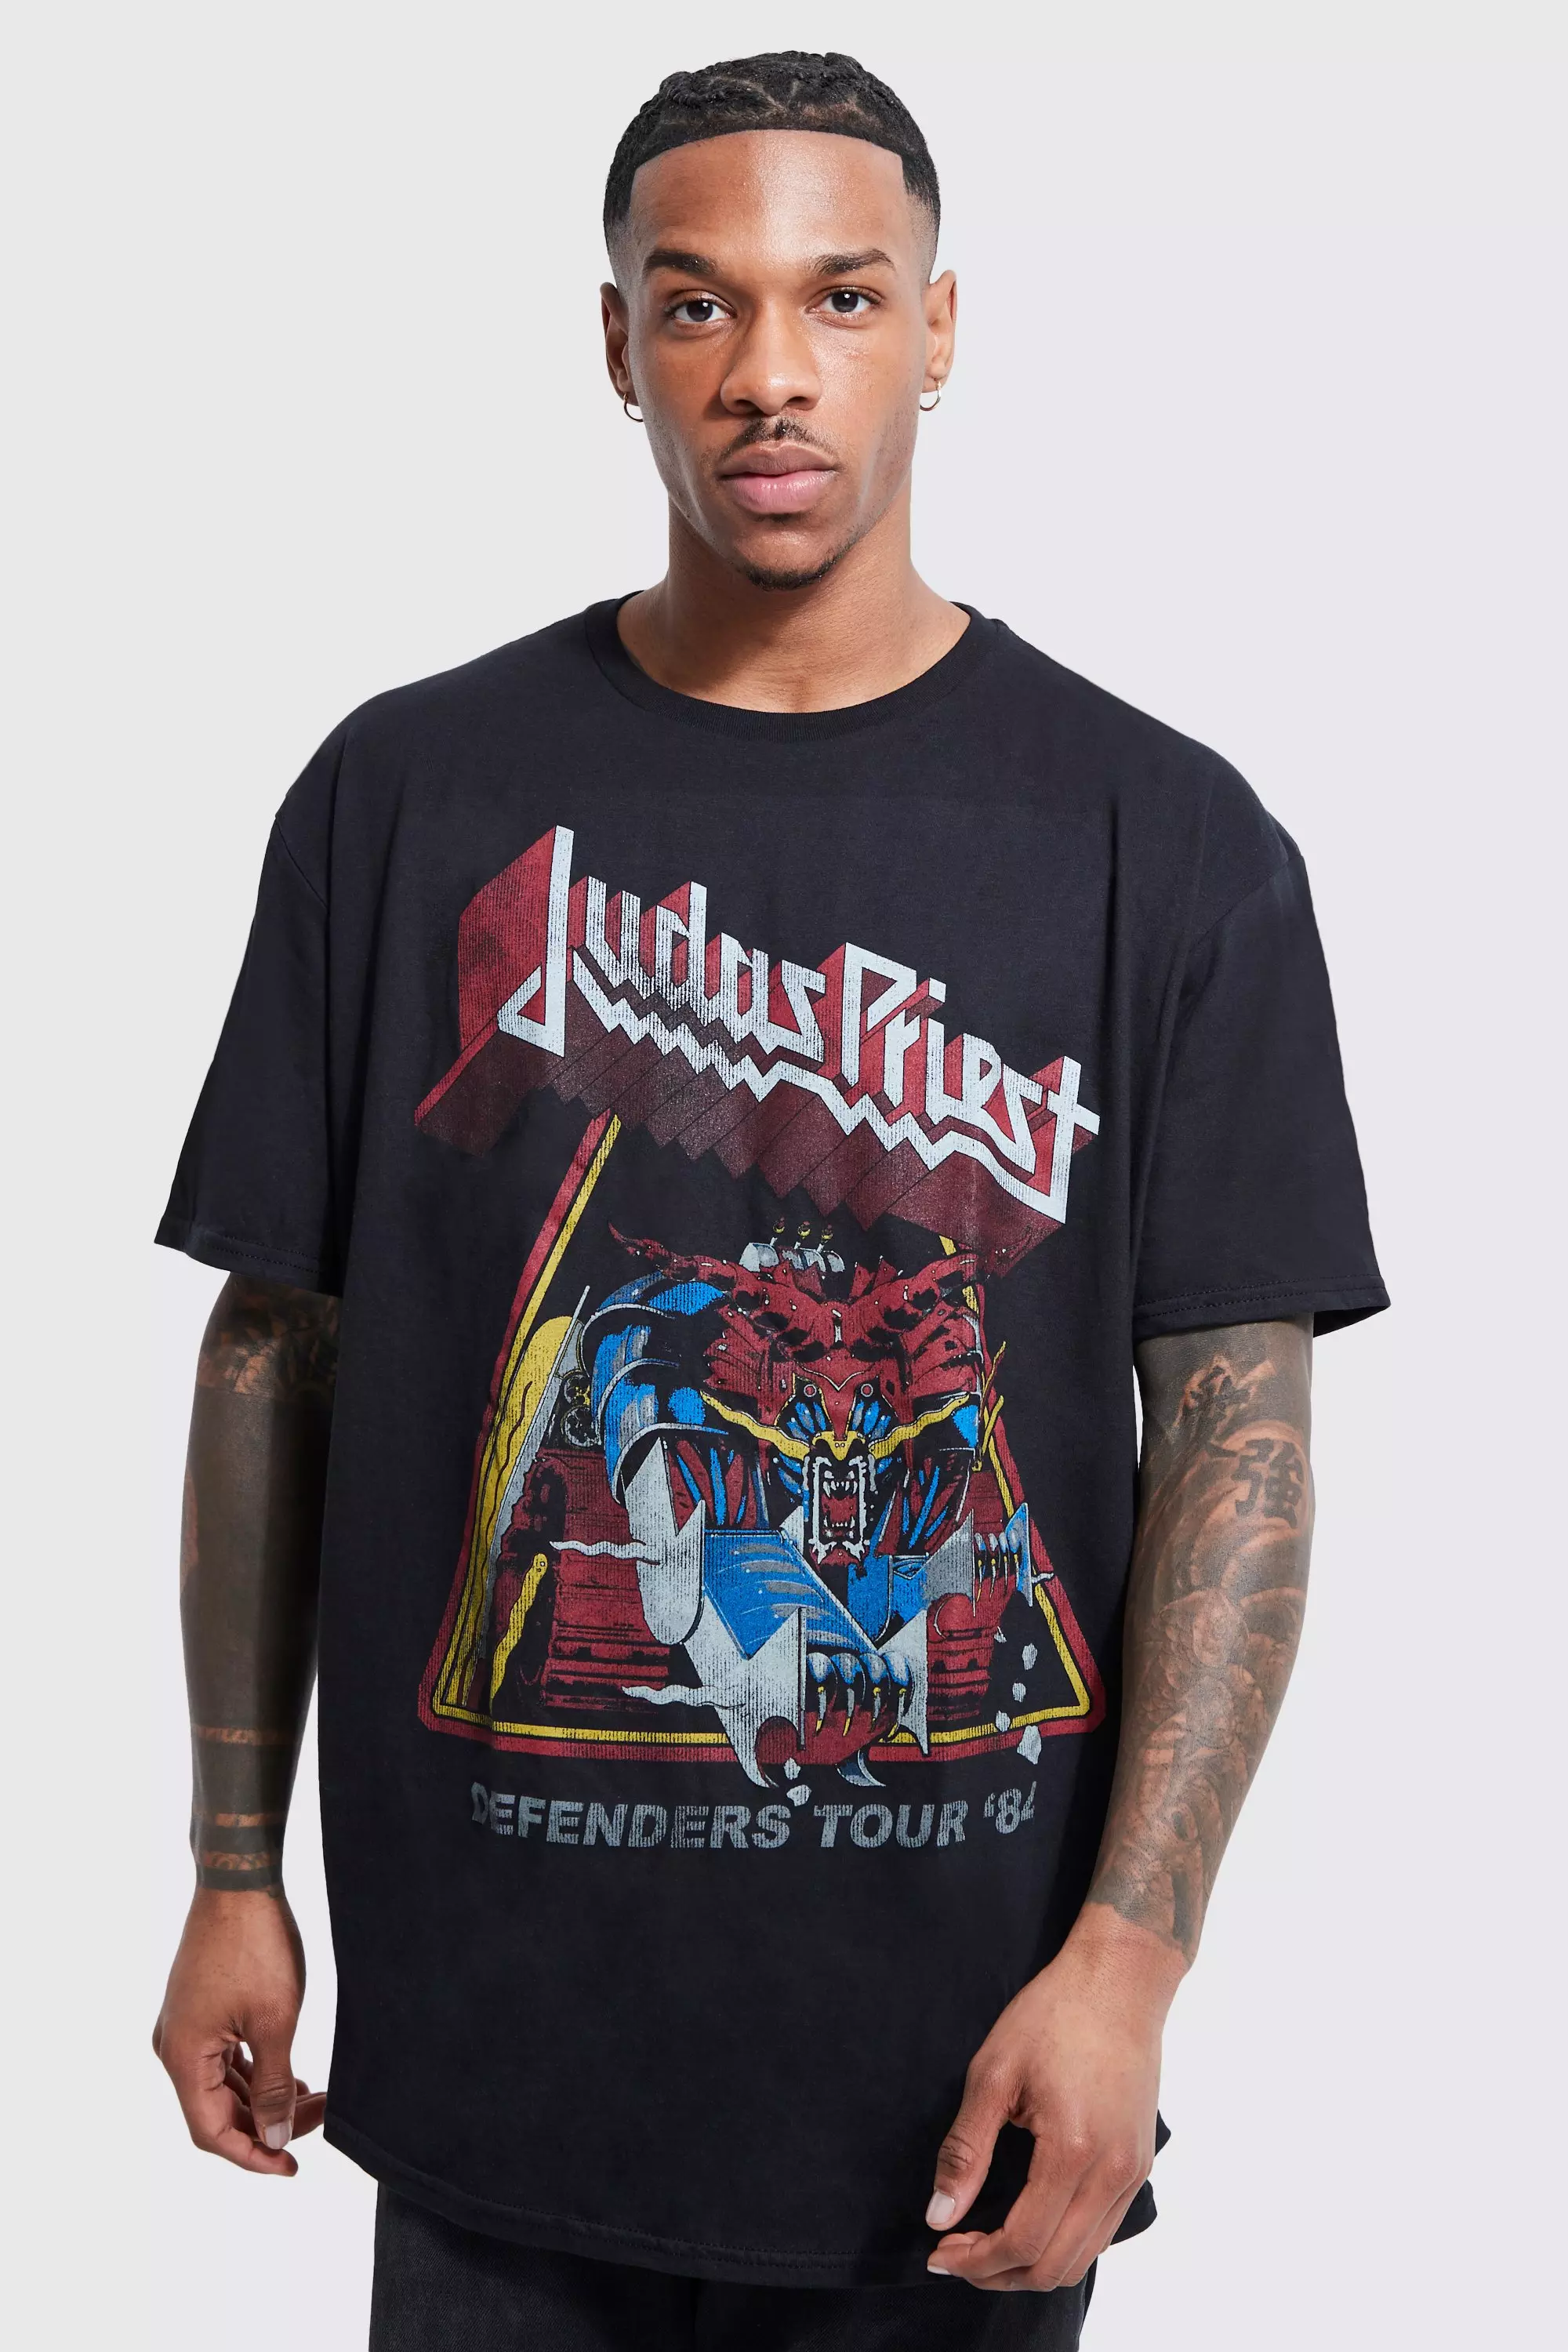 Oversized Judas Priest License T-shirt Black